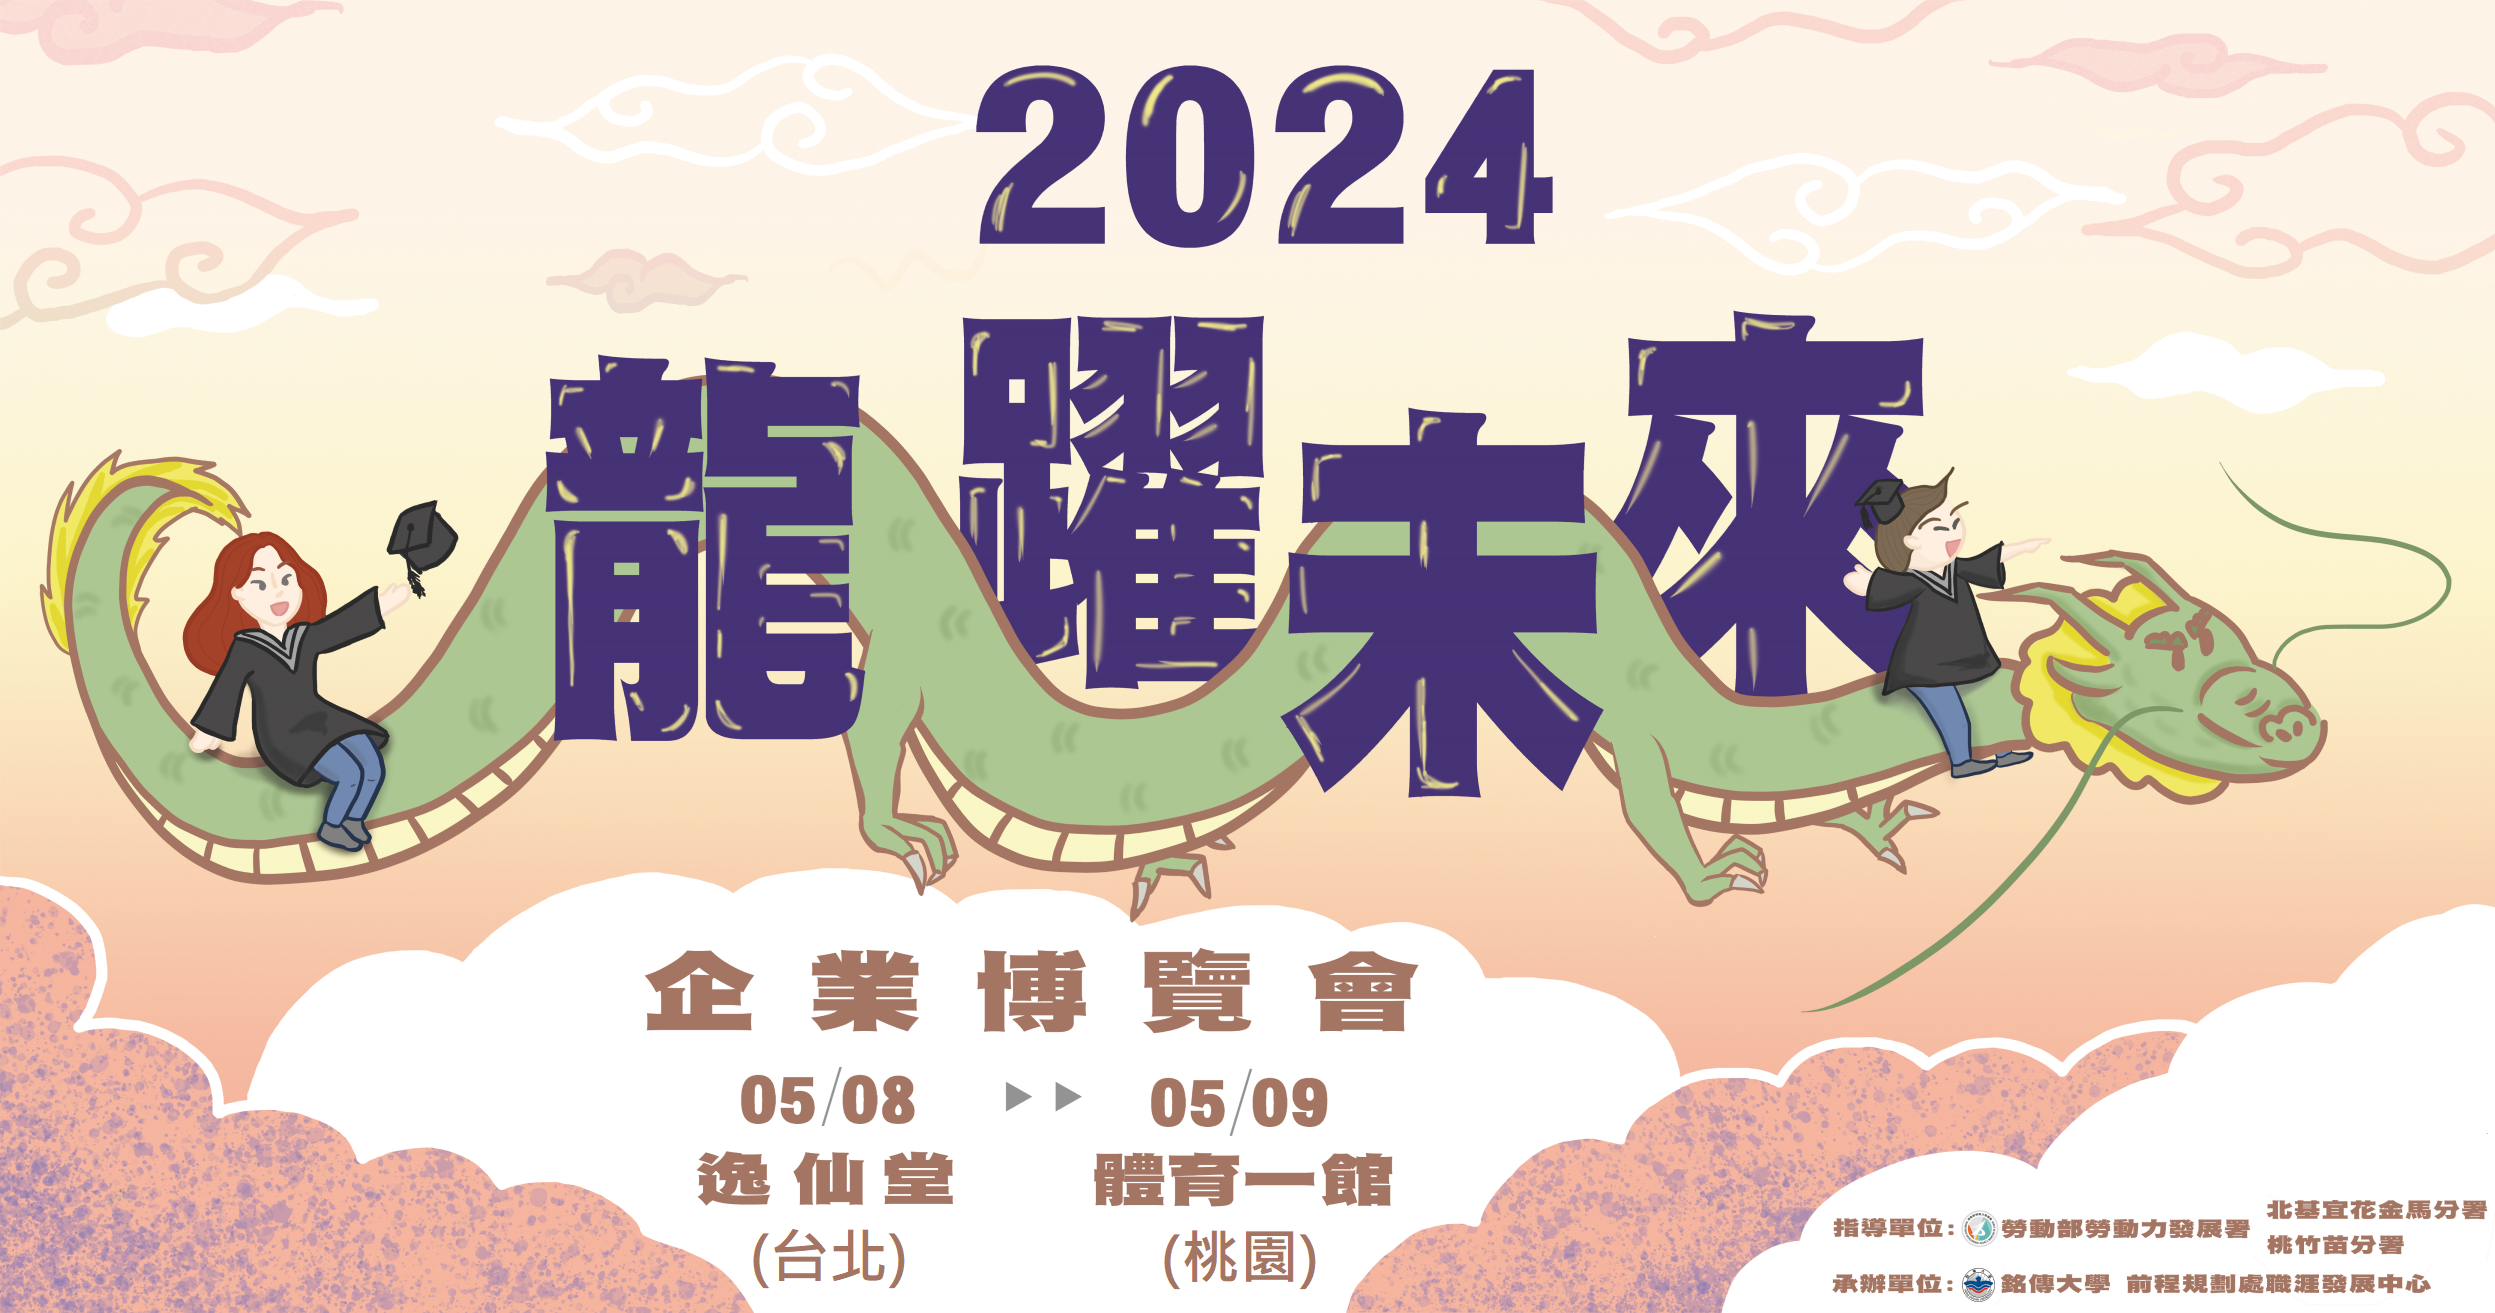 Featured image for “銘傳大學2024「龍躍未來」企業博覽會”